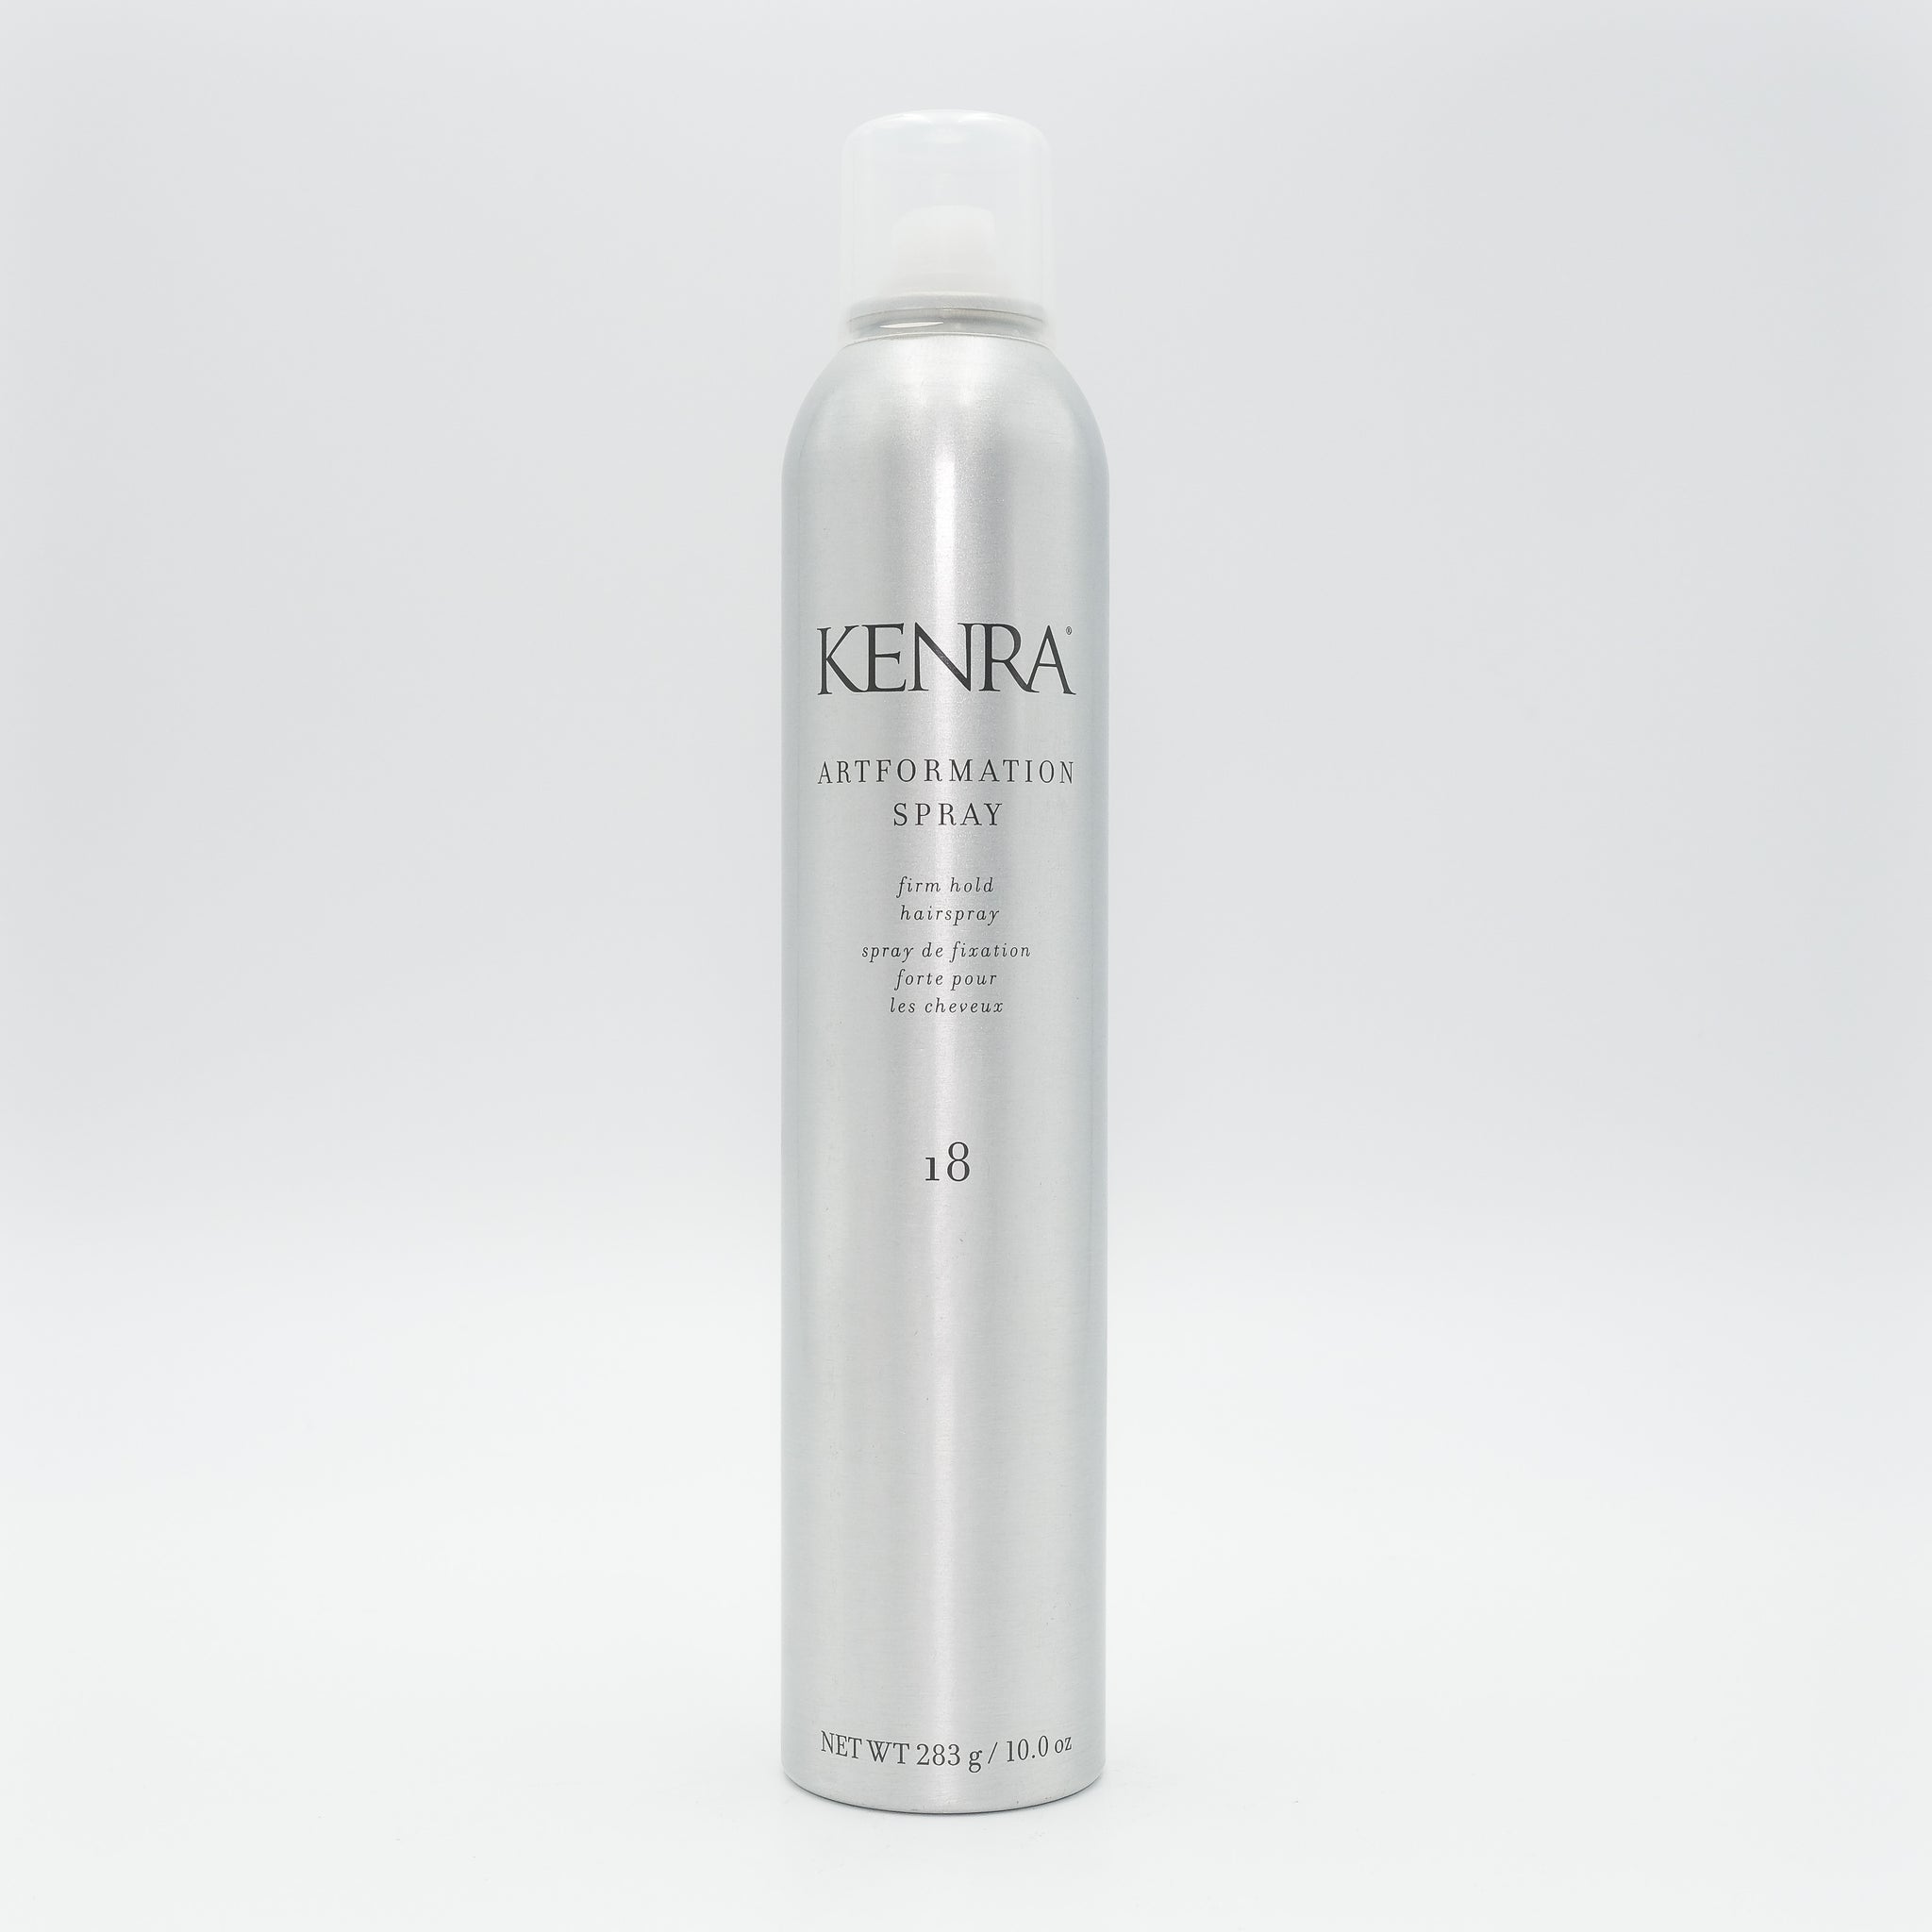 KENRA Artformation Spray 18 Firm Hold Hairspray 10 oz